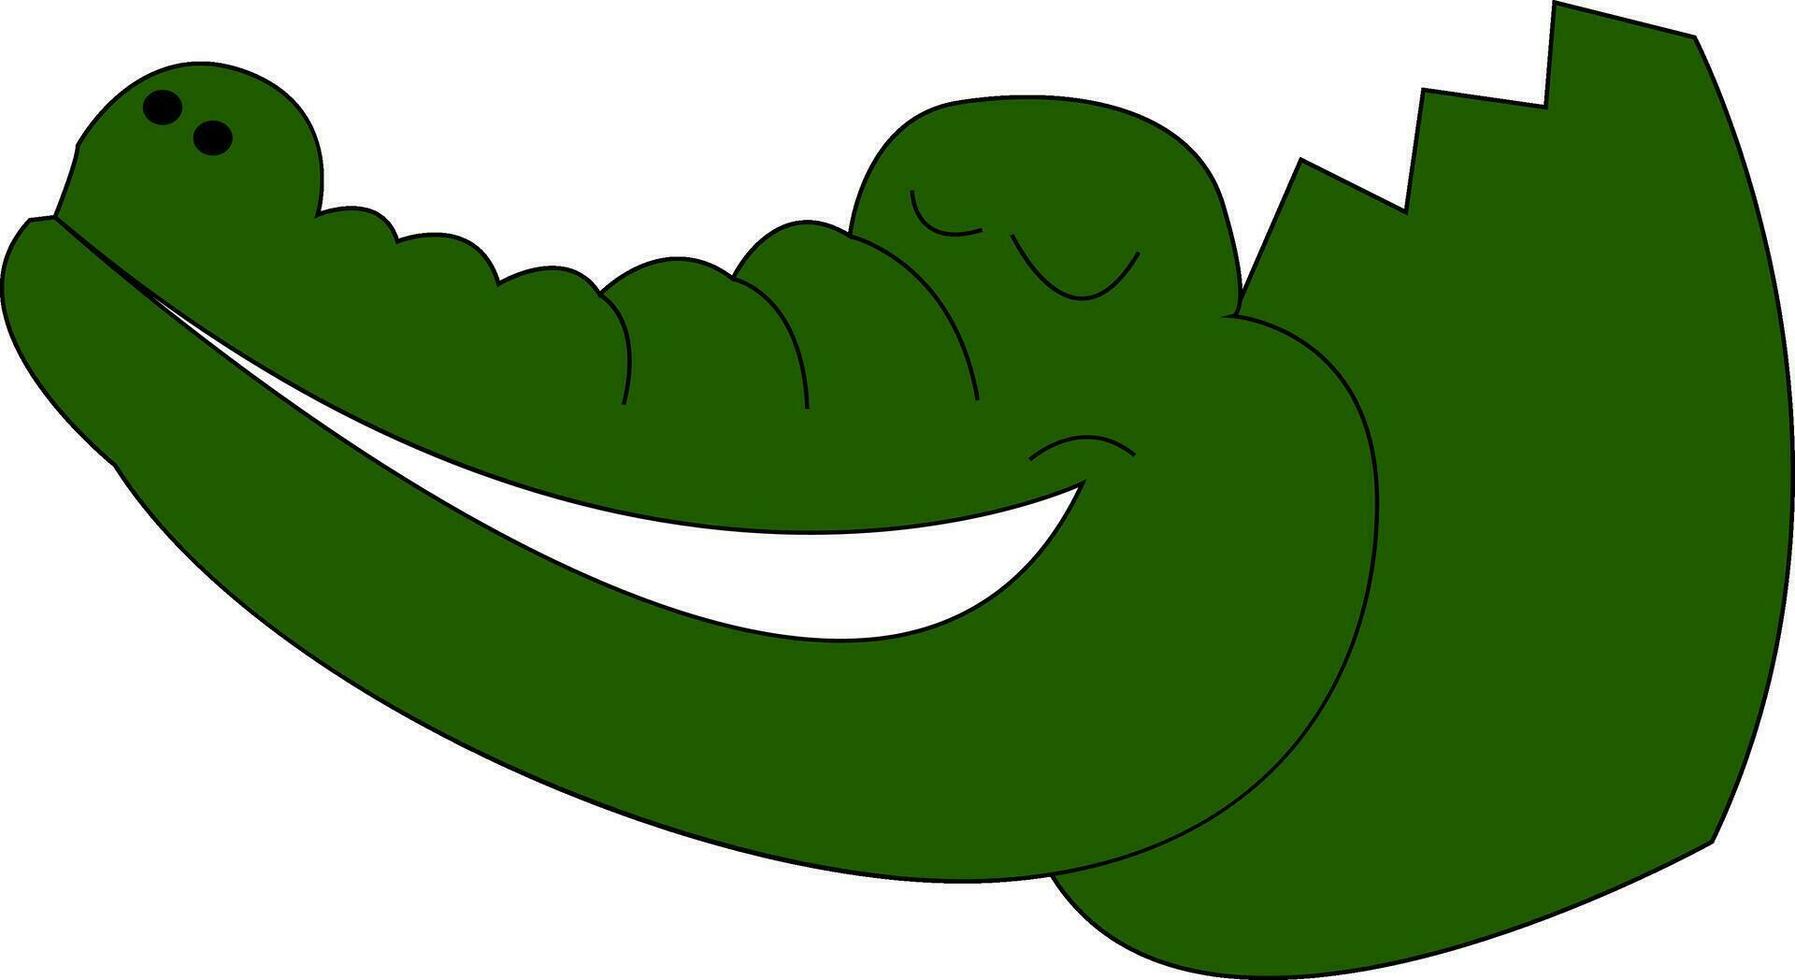 Sleeping green crocodile , vector or color illustration